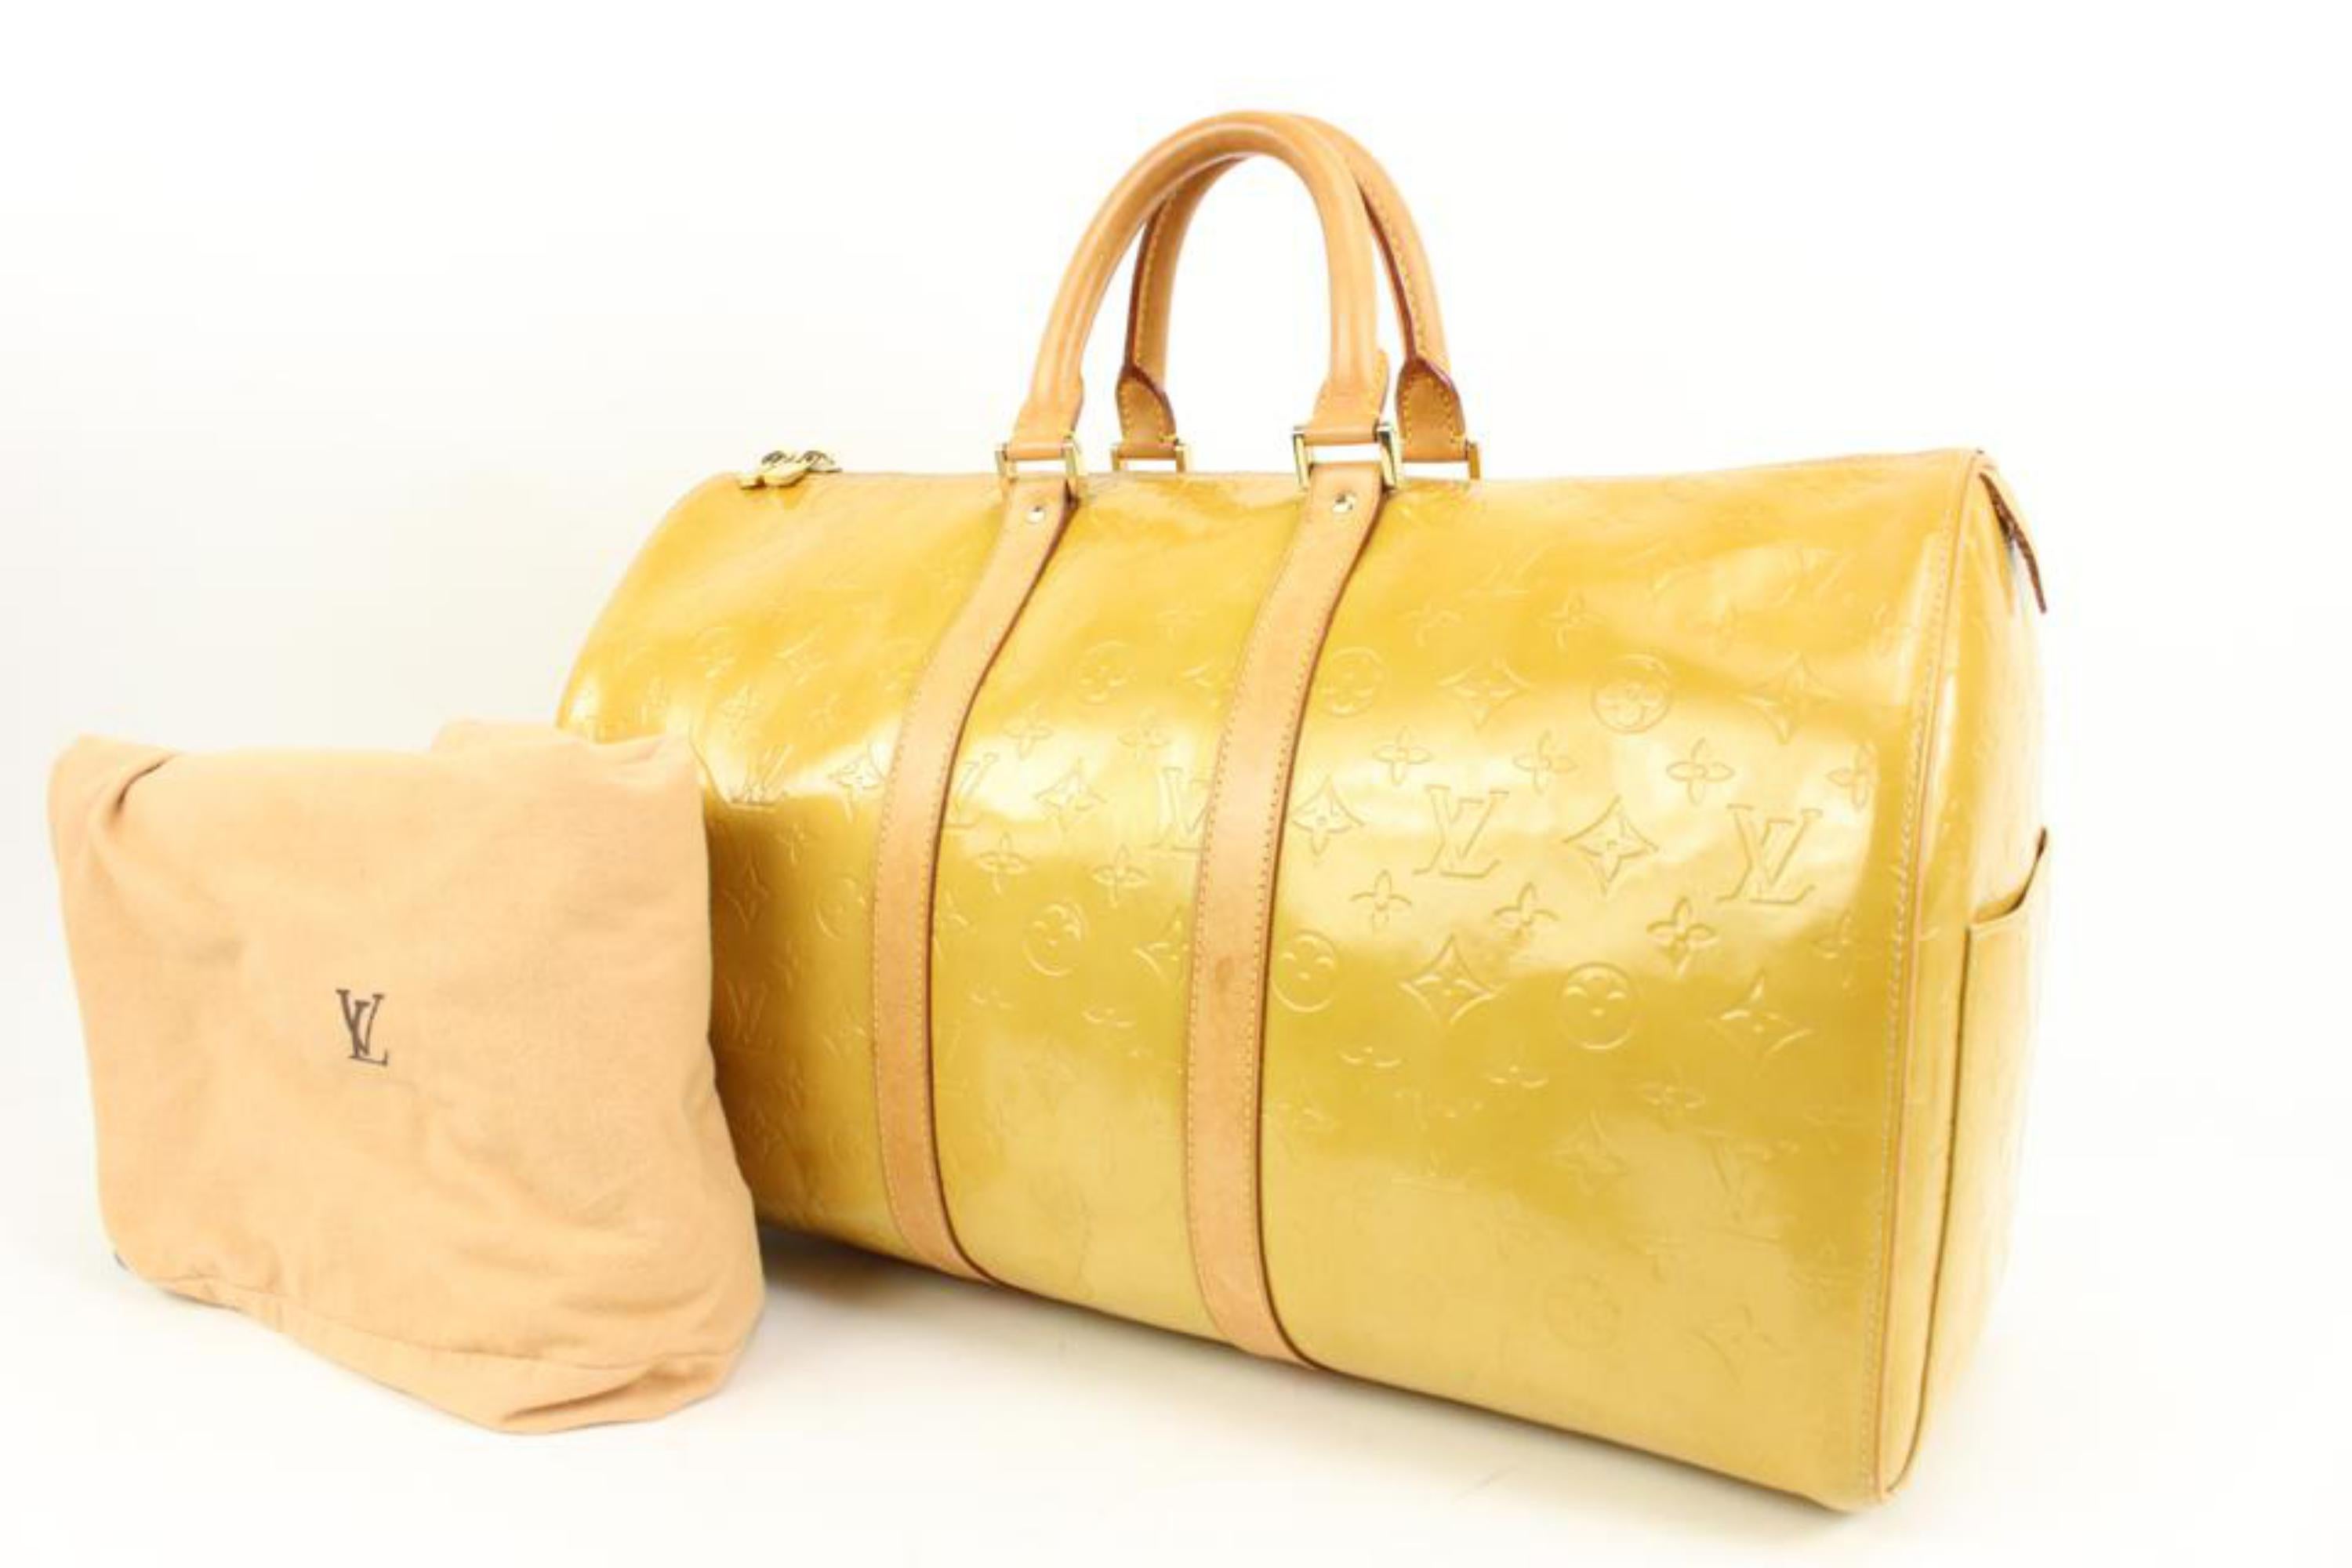 Louis Vuitton Yellow Monogram Vernis Mercer Keepall Duffle Bag 88lv317s
Date Code/Serial Number: BA1918
Made In: France
Measurements: Length:  18.5